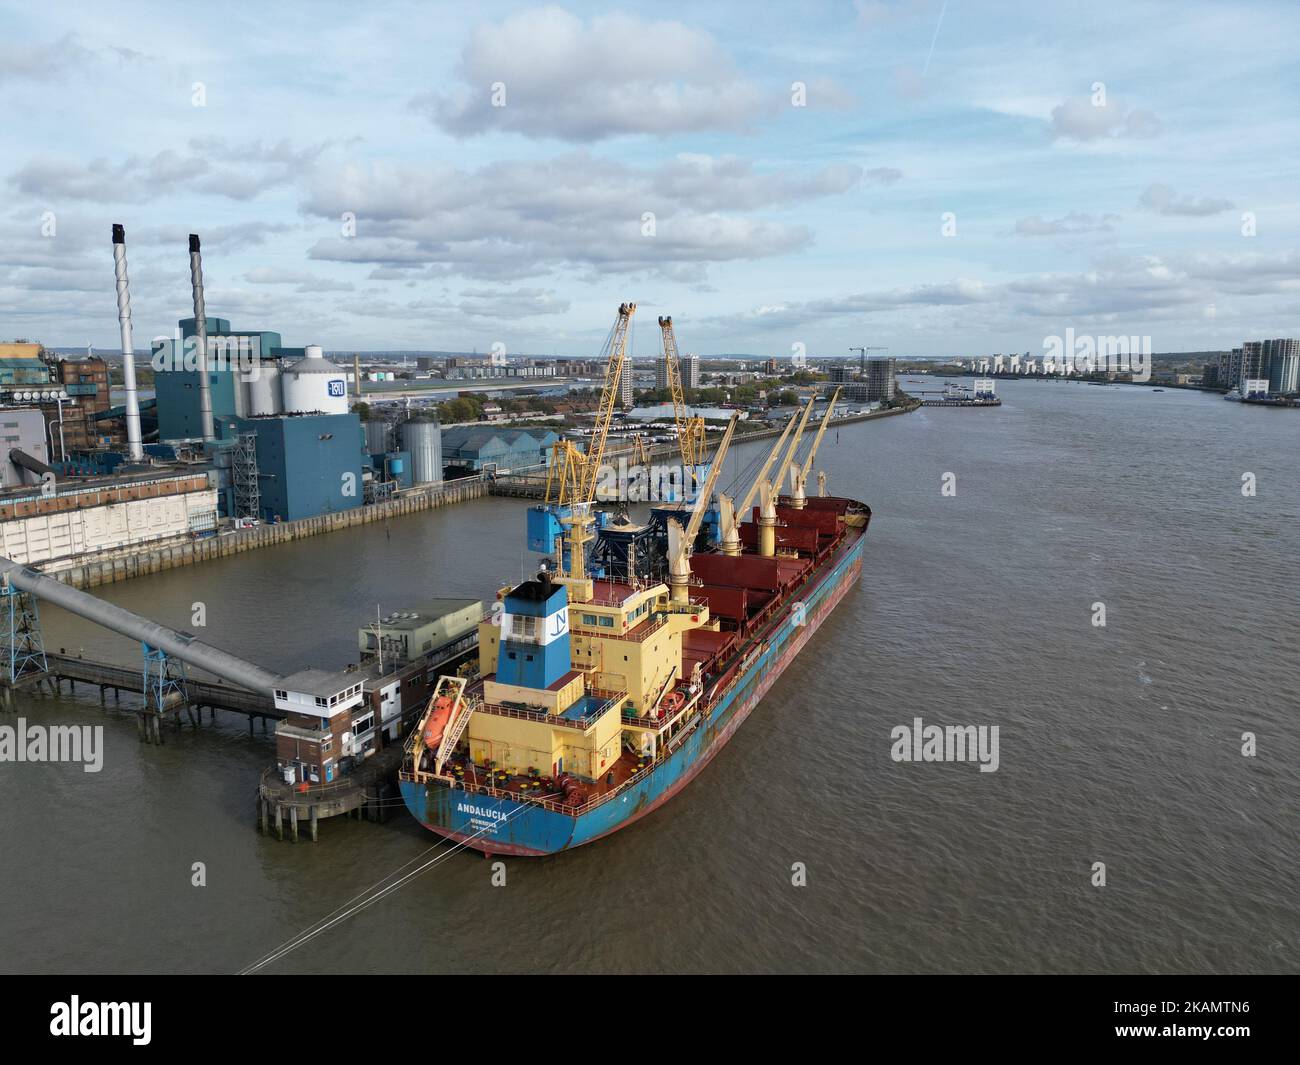 Tate & Lyle Sugar Raffinerie Silvertown London Drohne Luftaufnahme Stockfoto